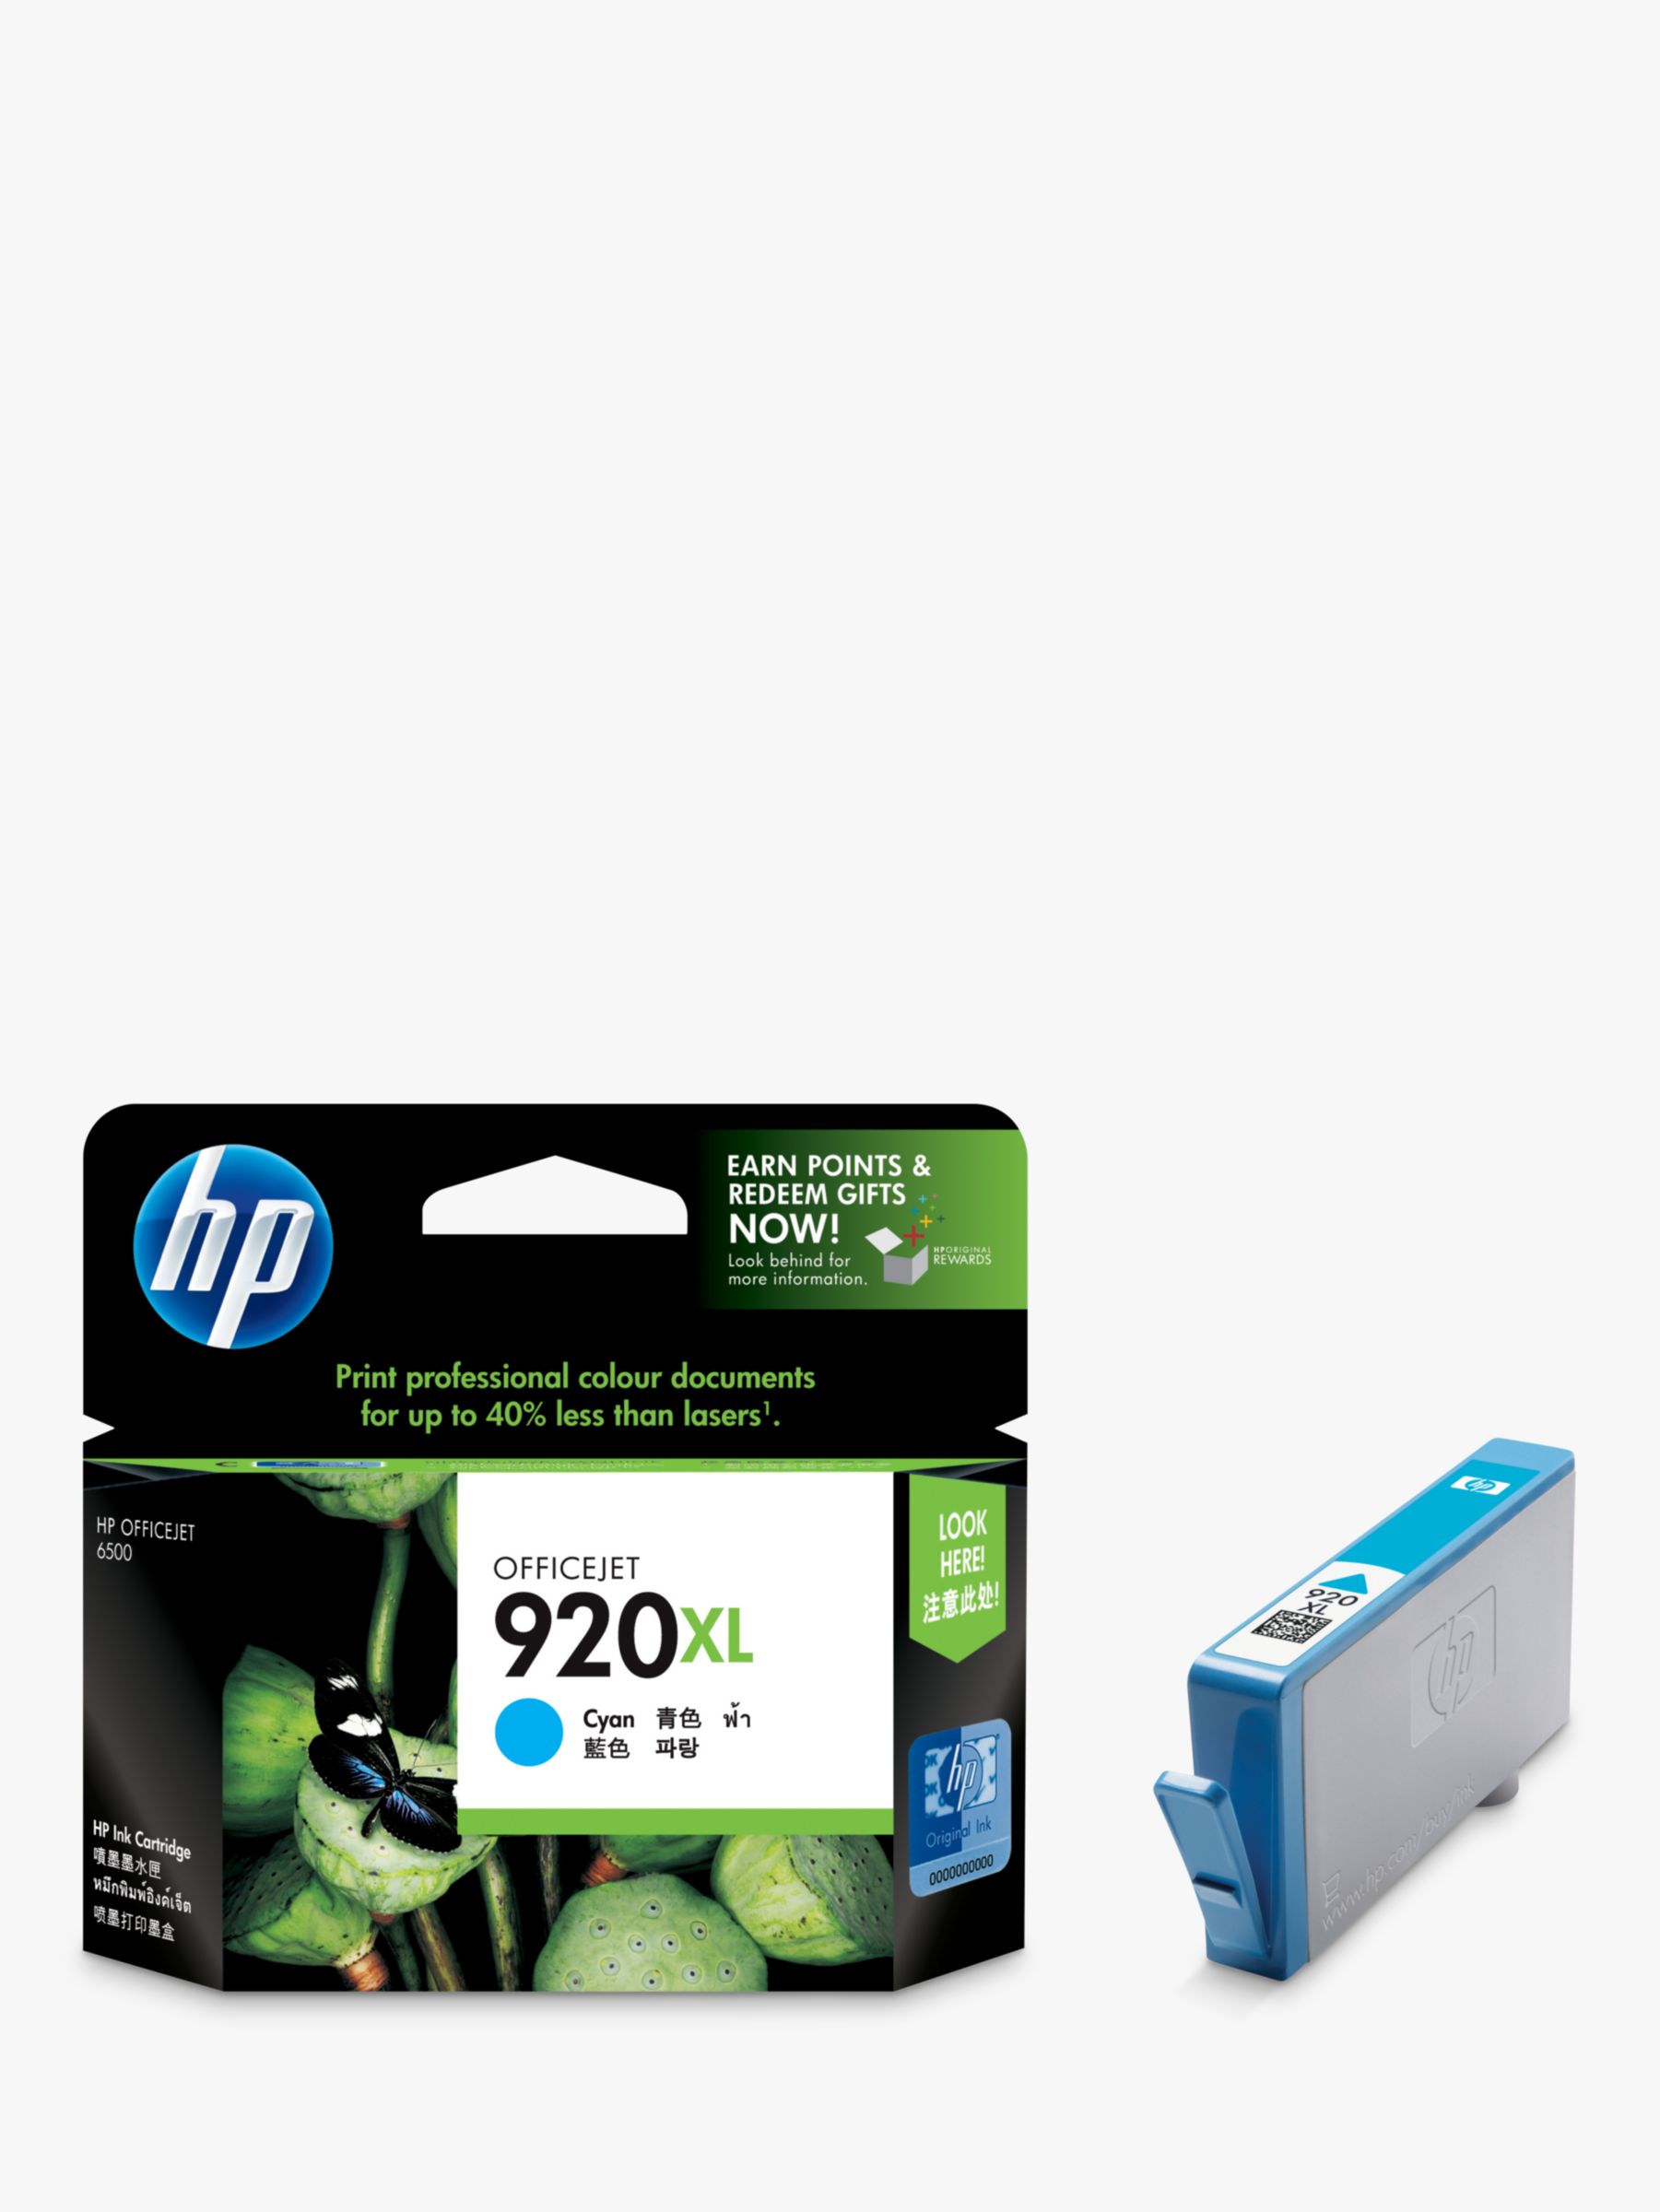 HP 920XL Officejet Printer Cartridge, Cyan,